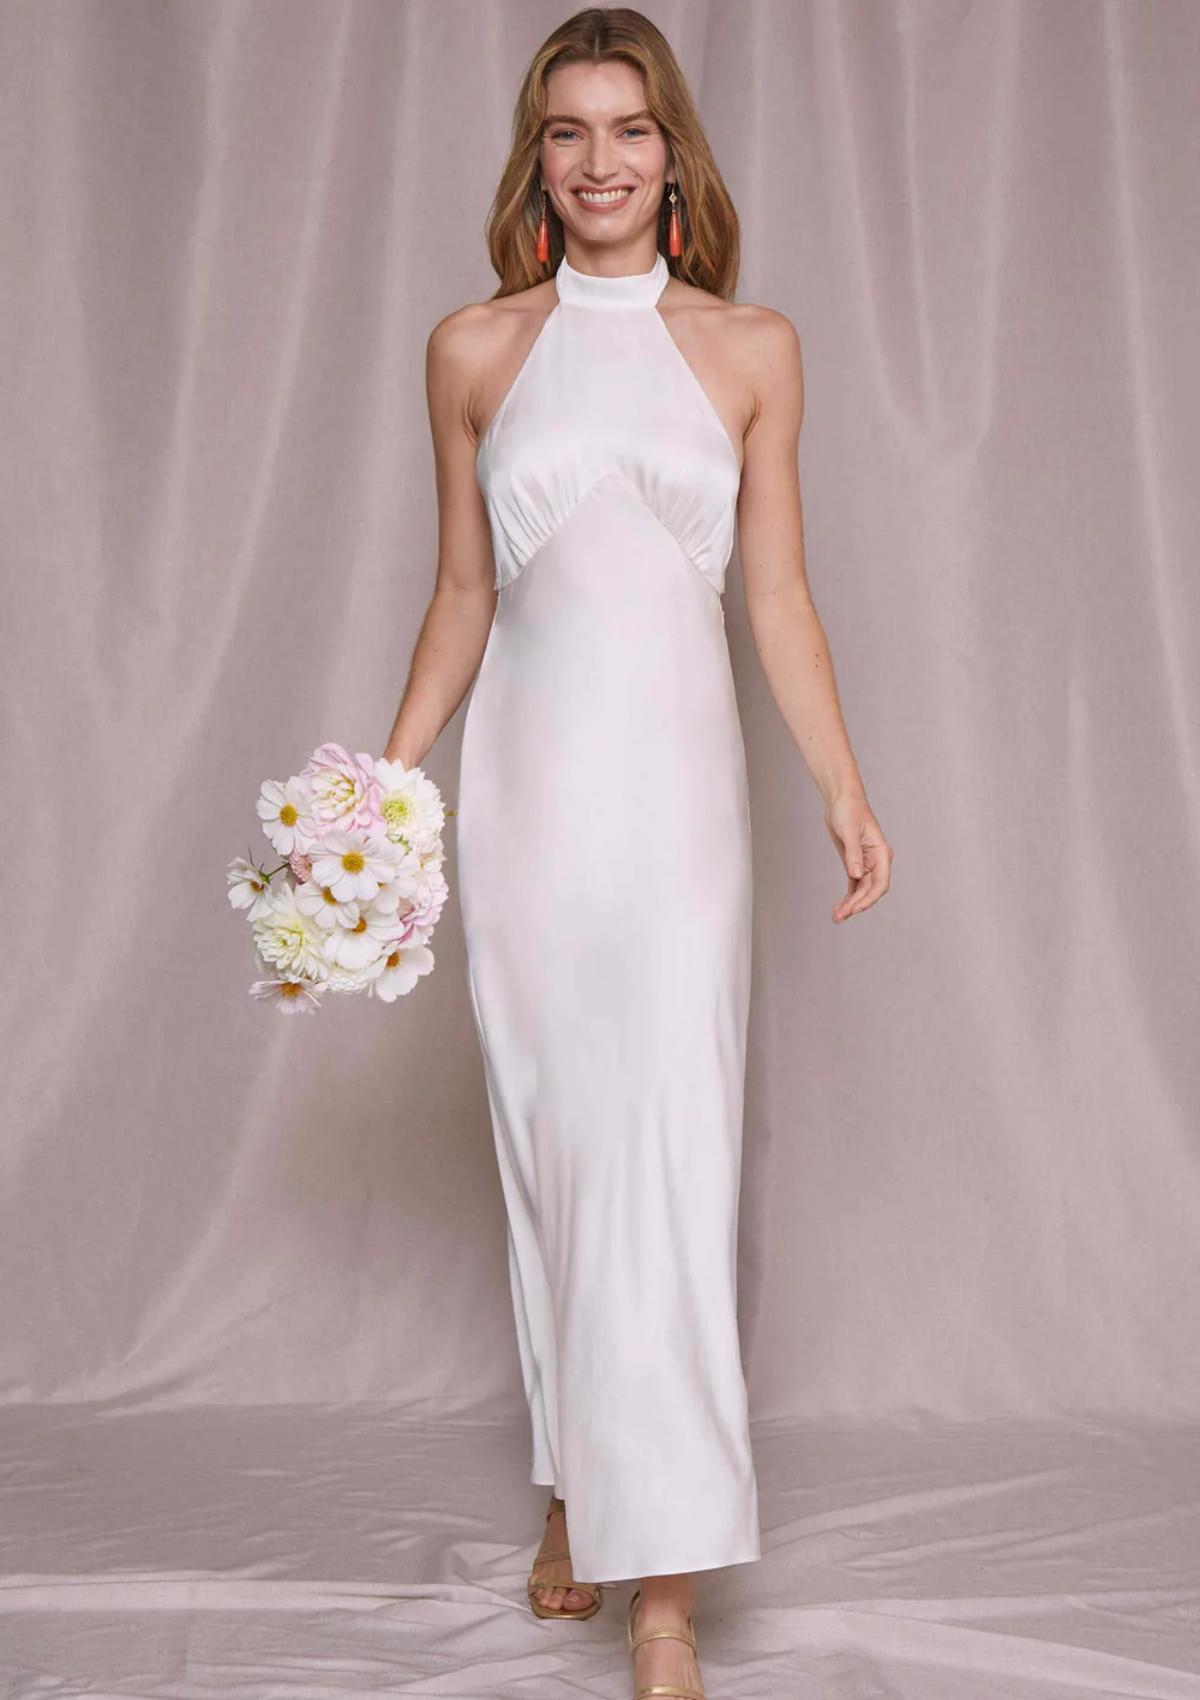 17 seriously stunning wedding dresses under $500 - HelloGigglesHelloGiggles